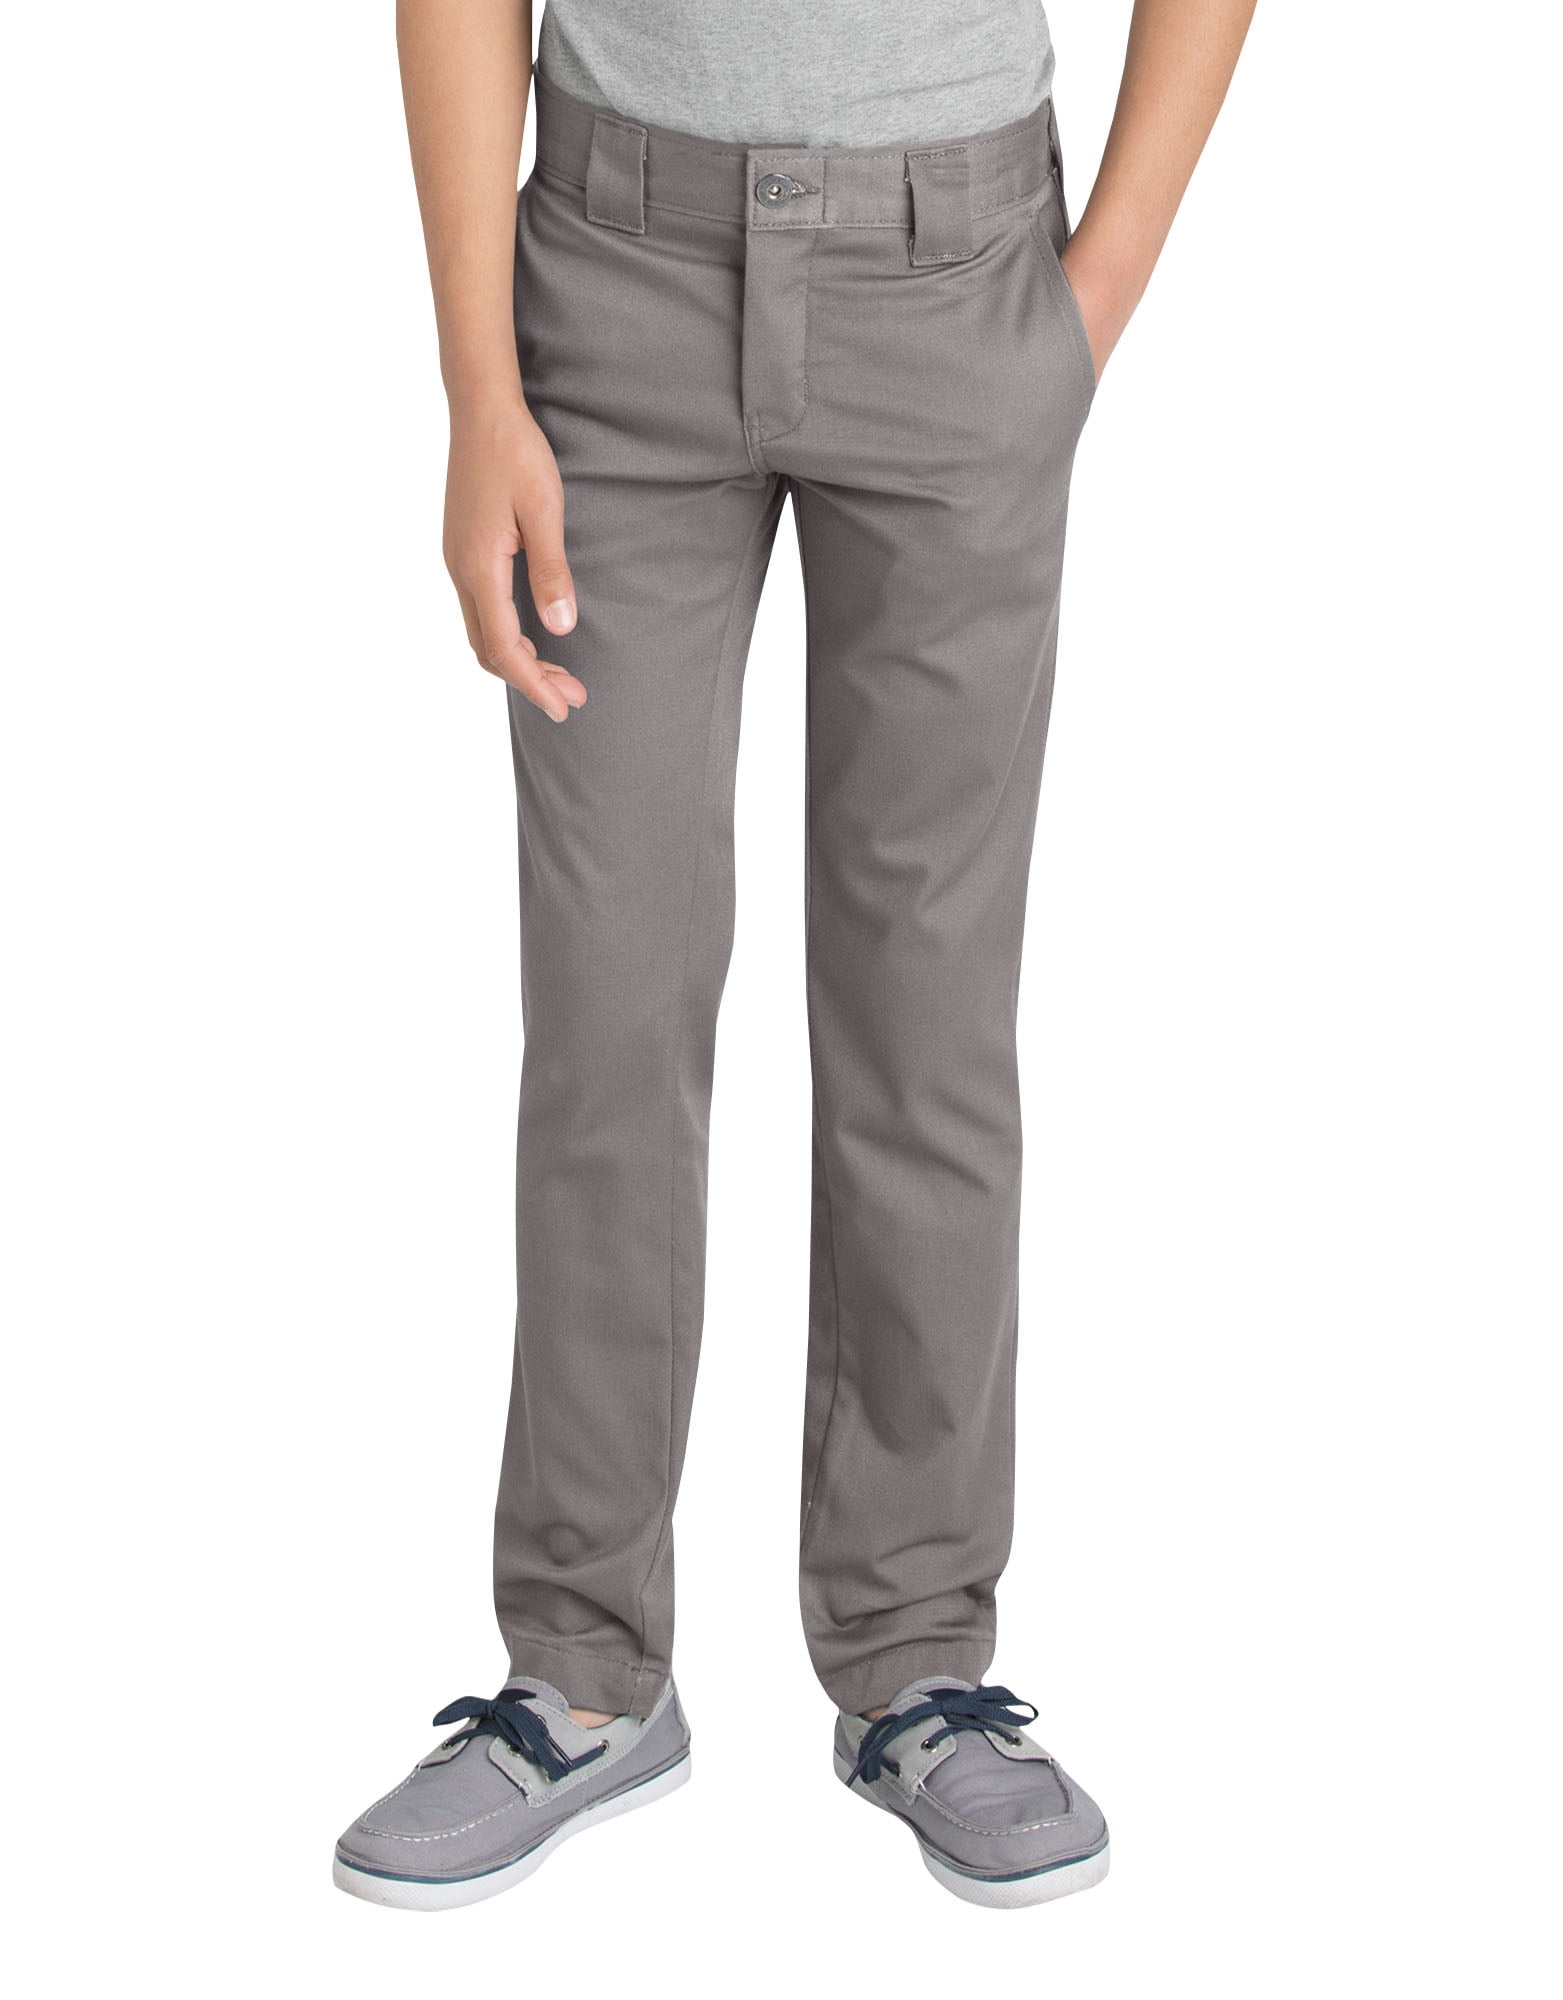 Boys' School Uniforms Skinny Fit Flex Pant - Walmart.com